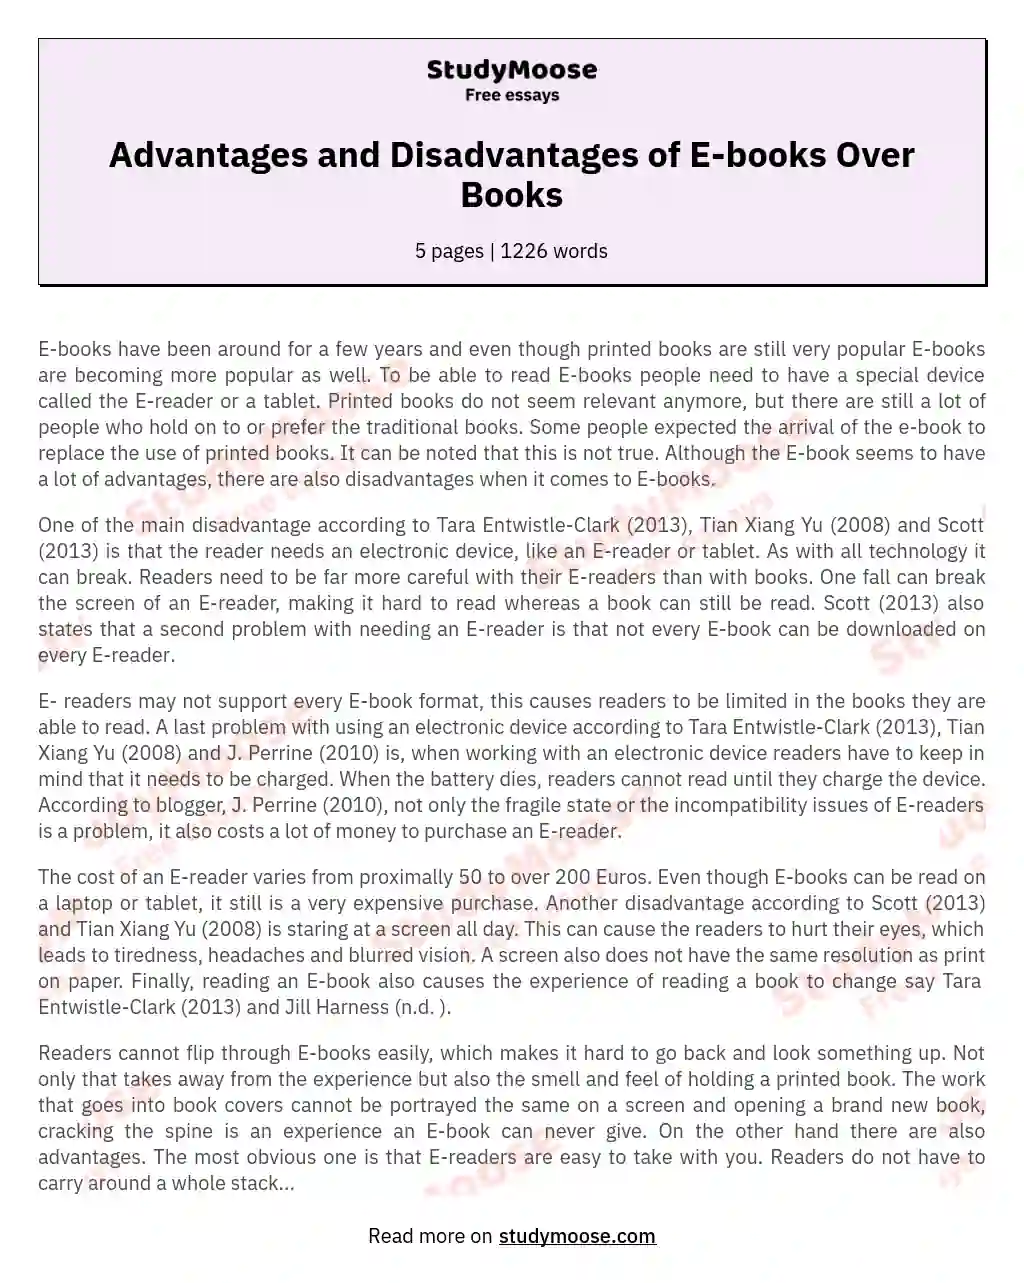 Advantages and Disadvantages of E-books Over Books essay